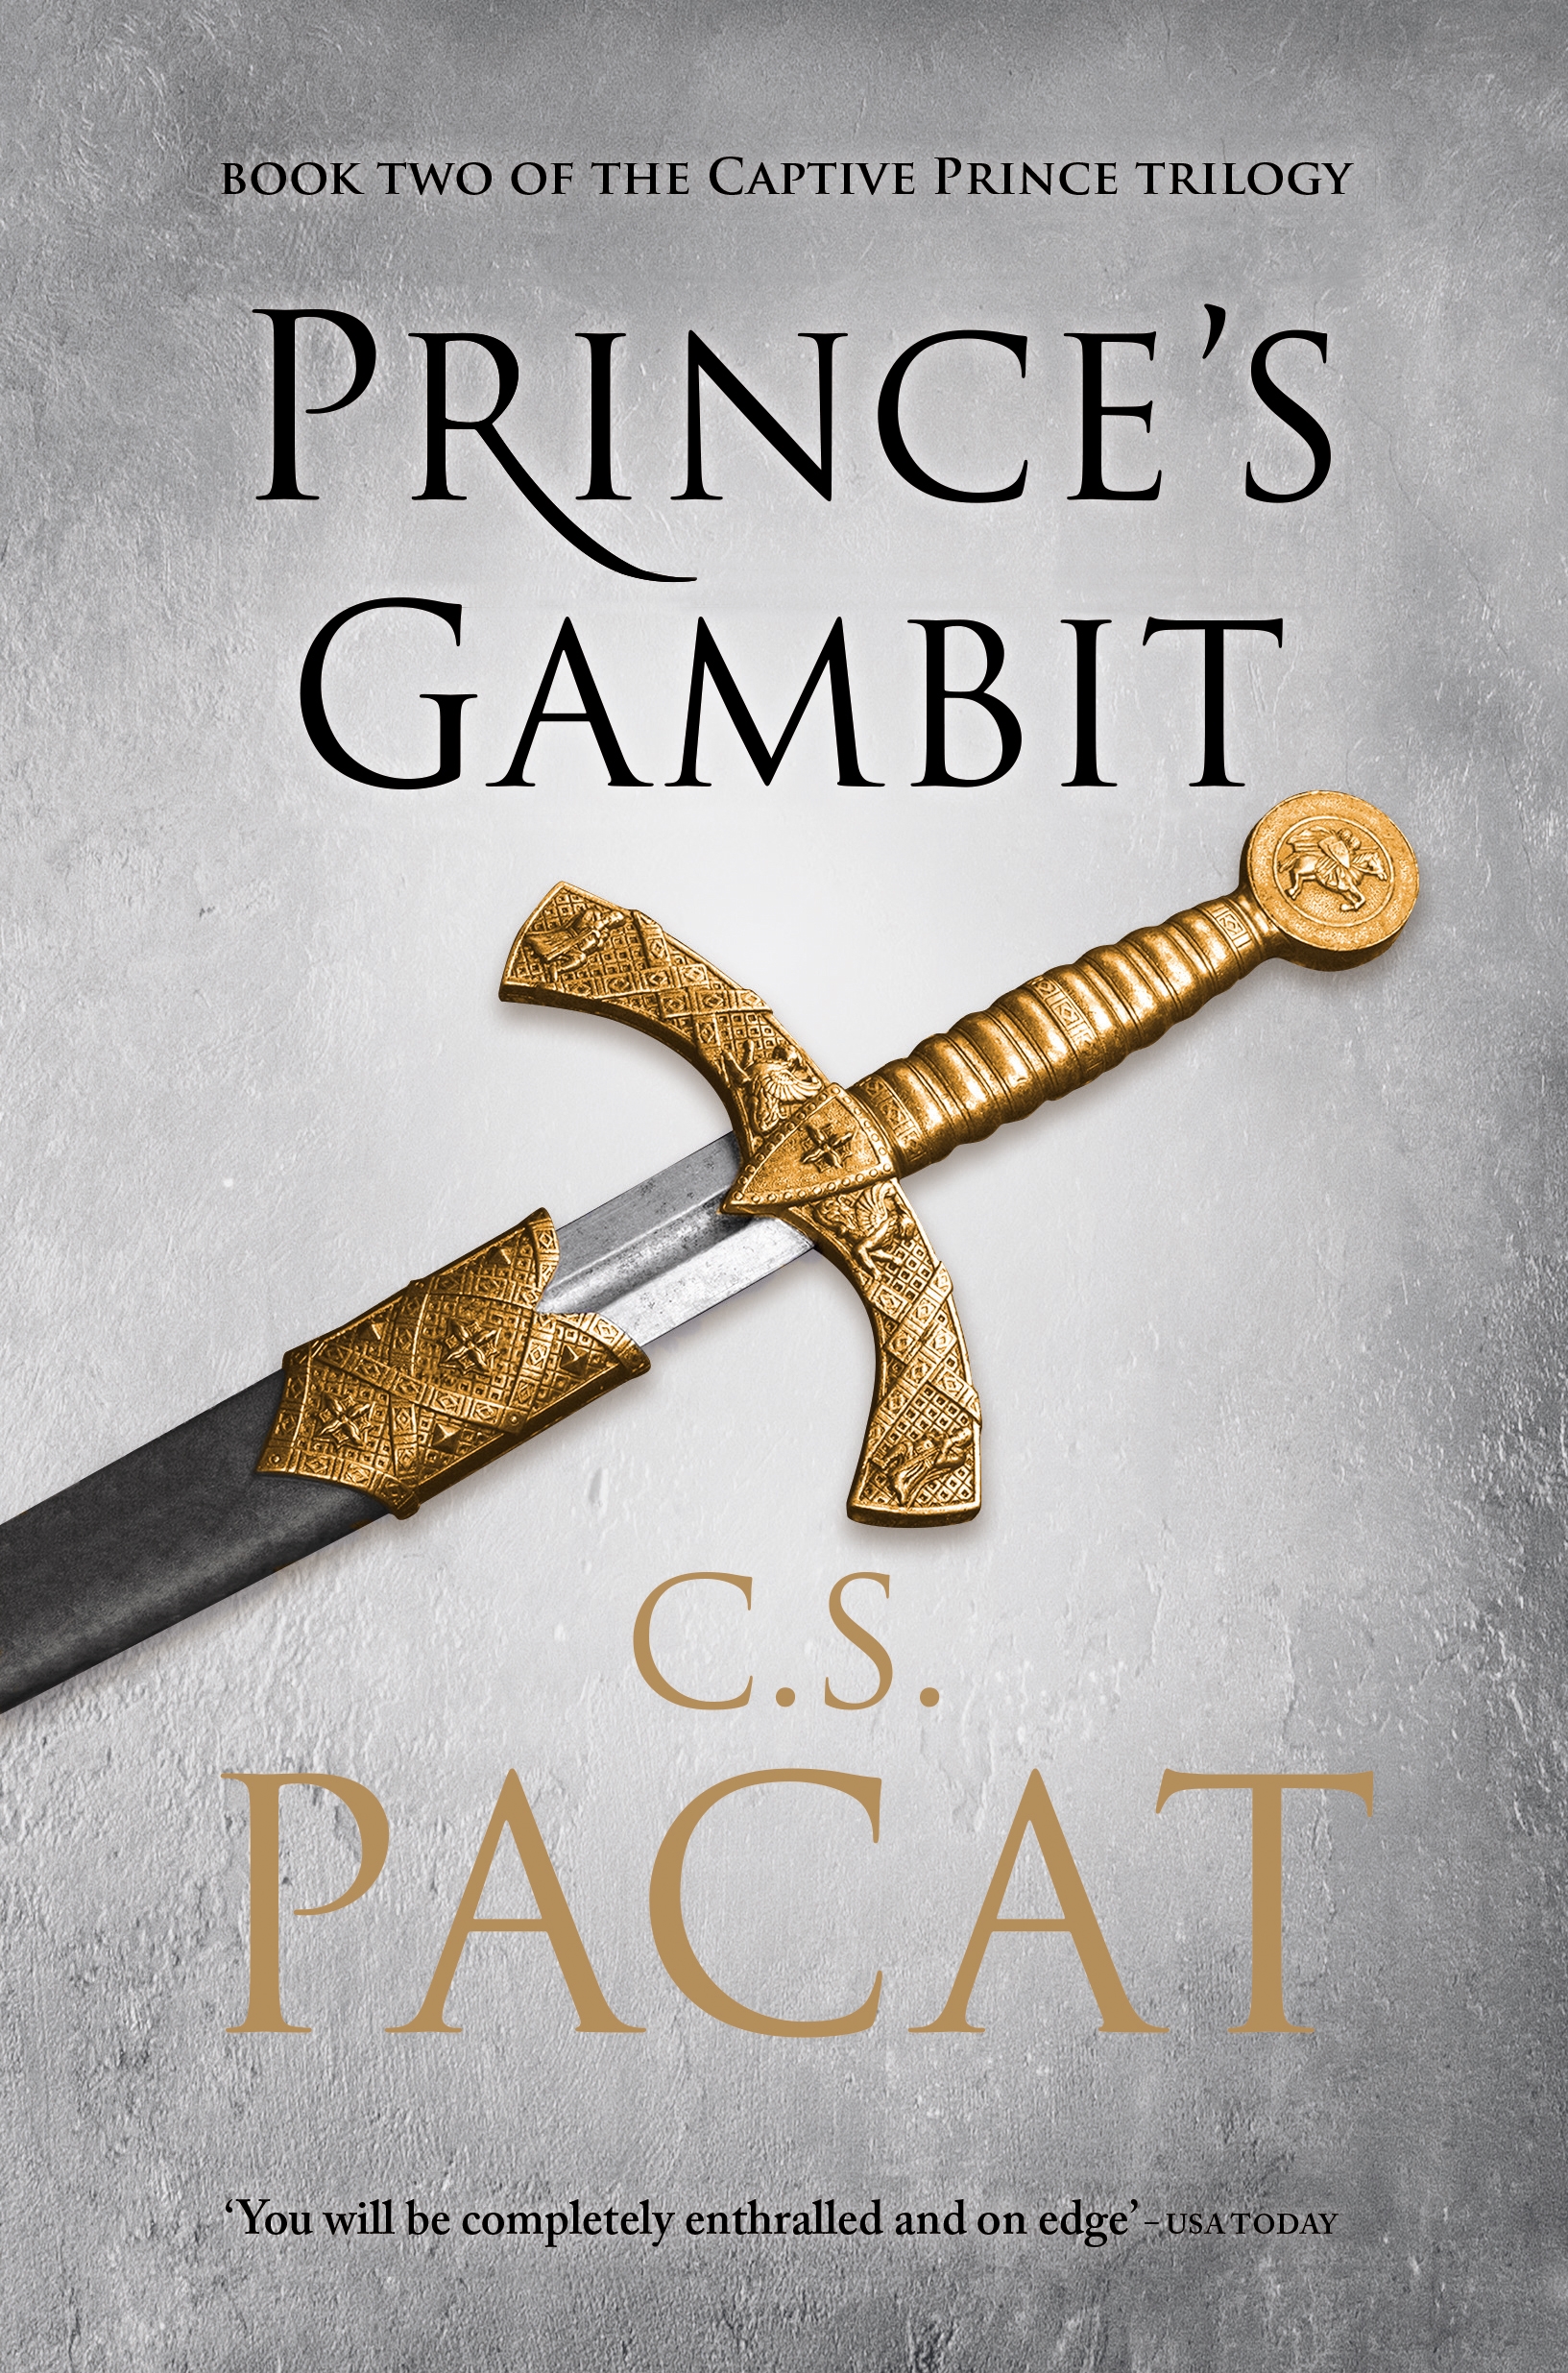 Captive Prince - Princes Gambit